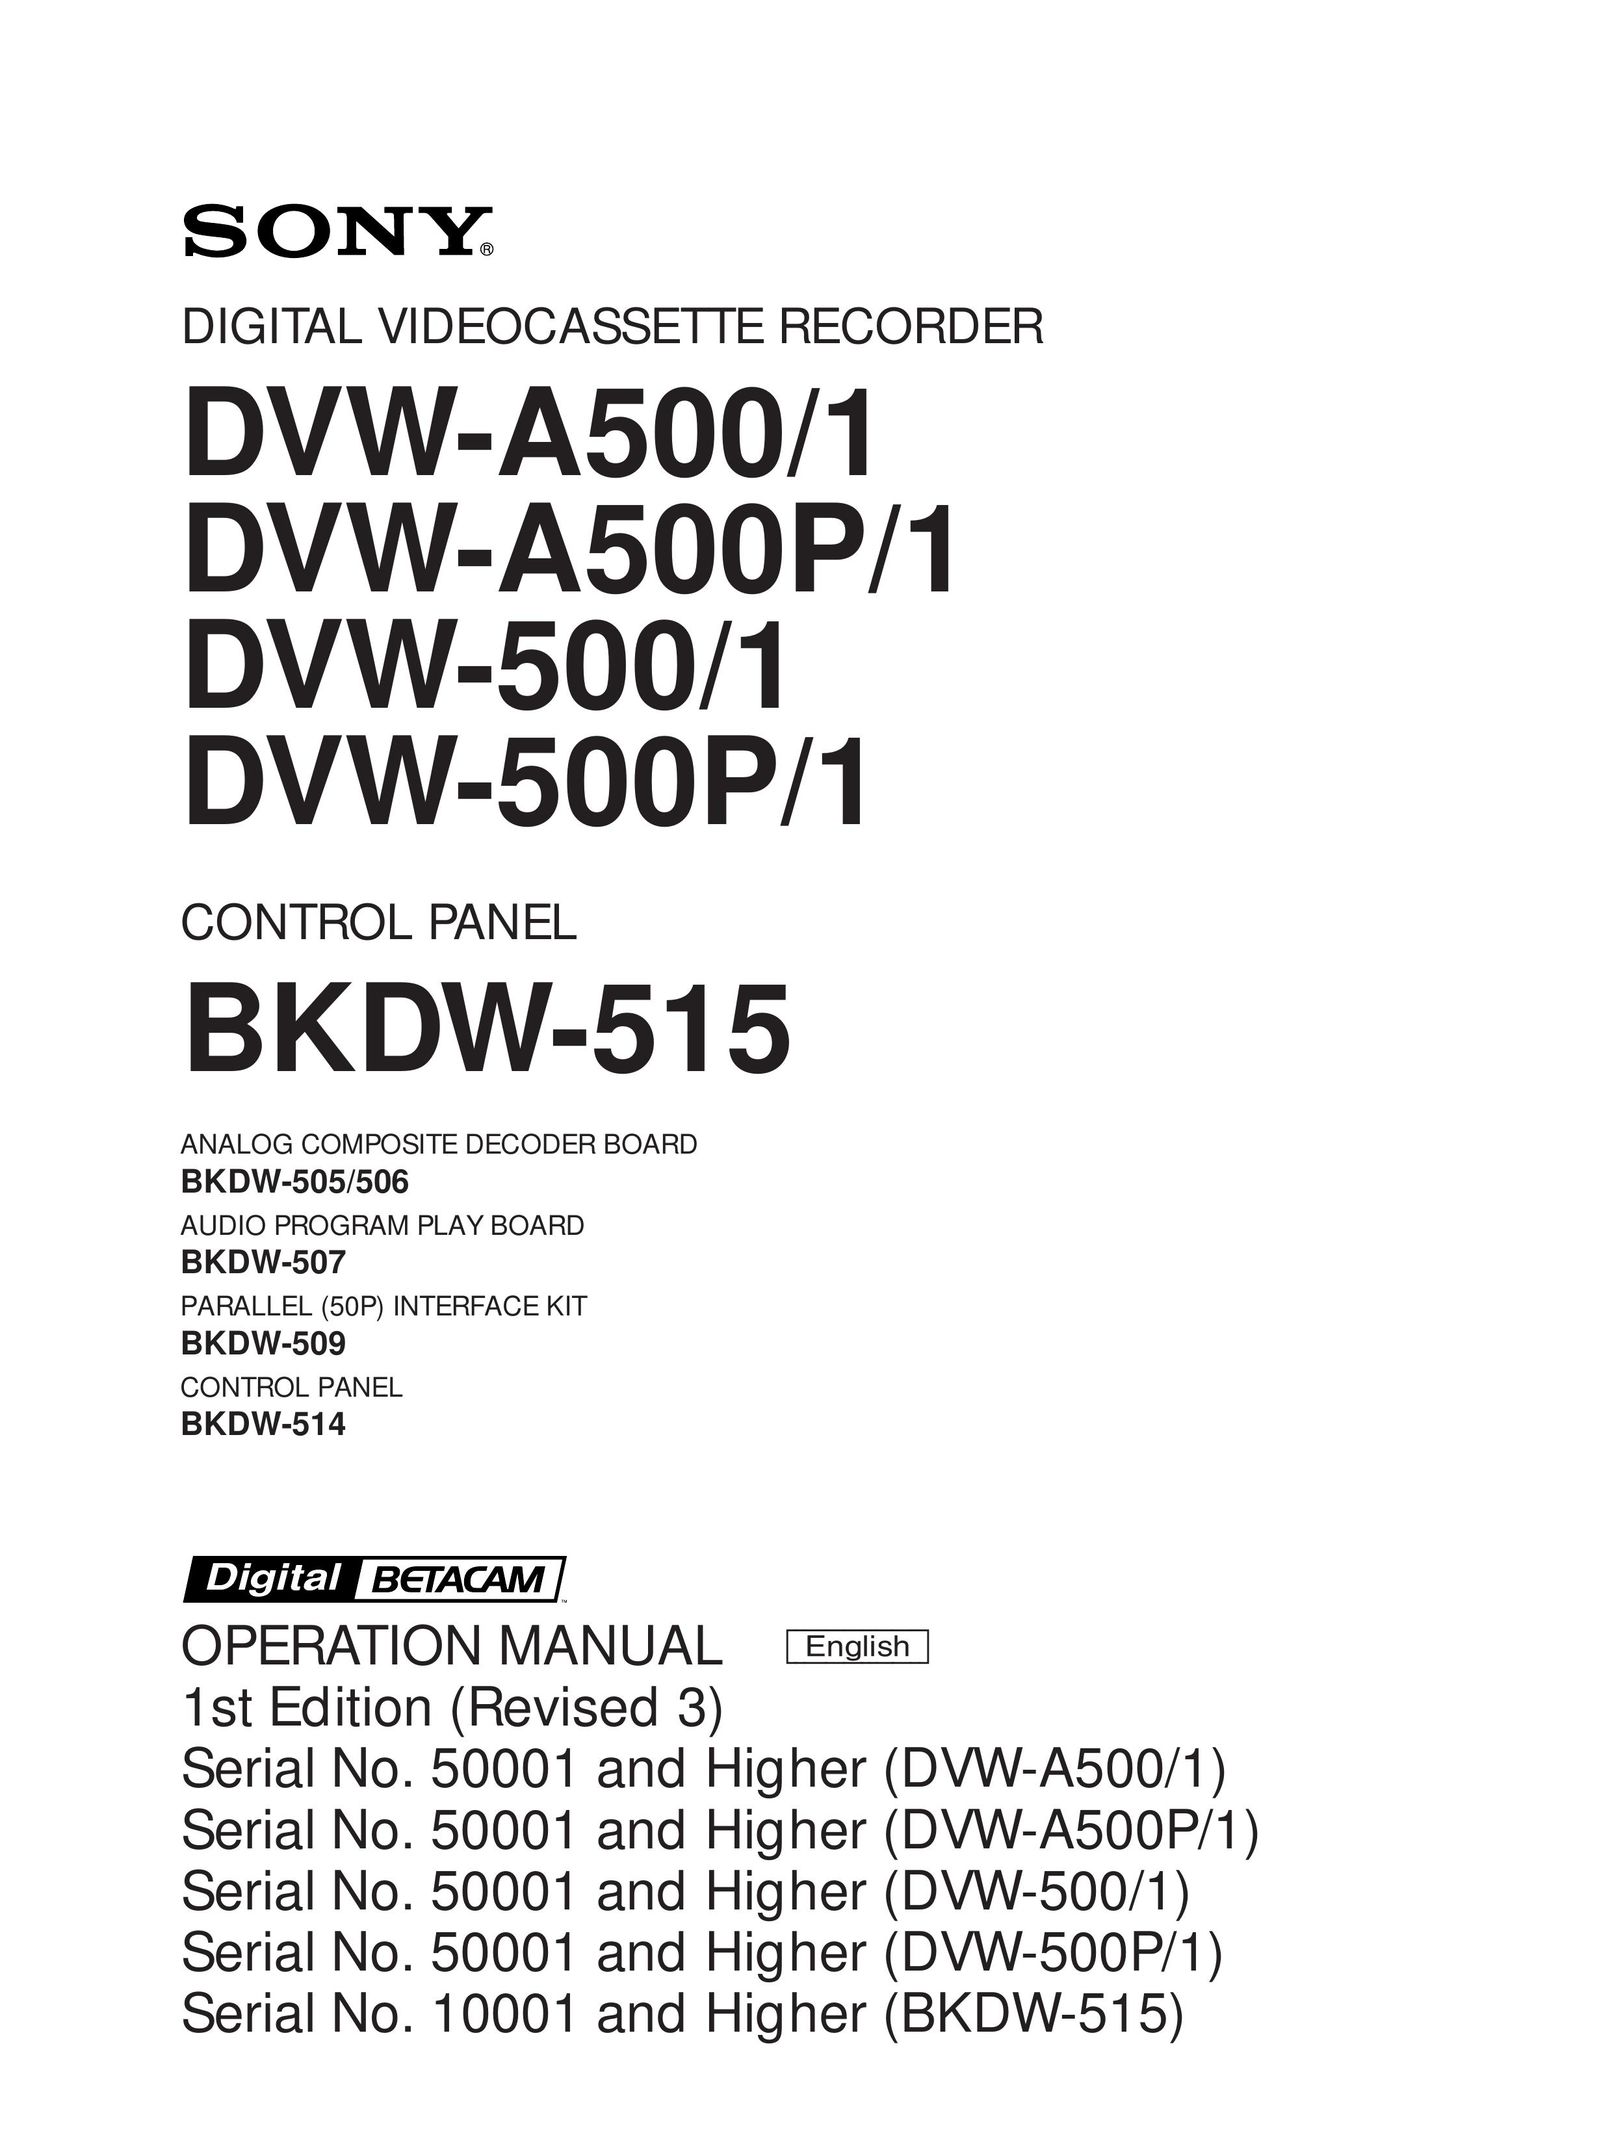 Sony DVW-500/1 DVR User Manual